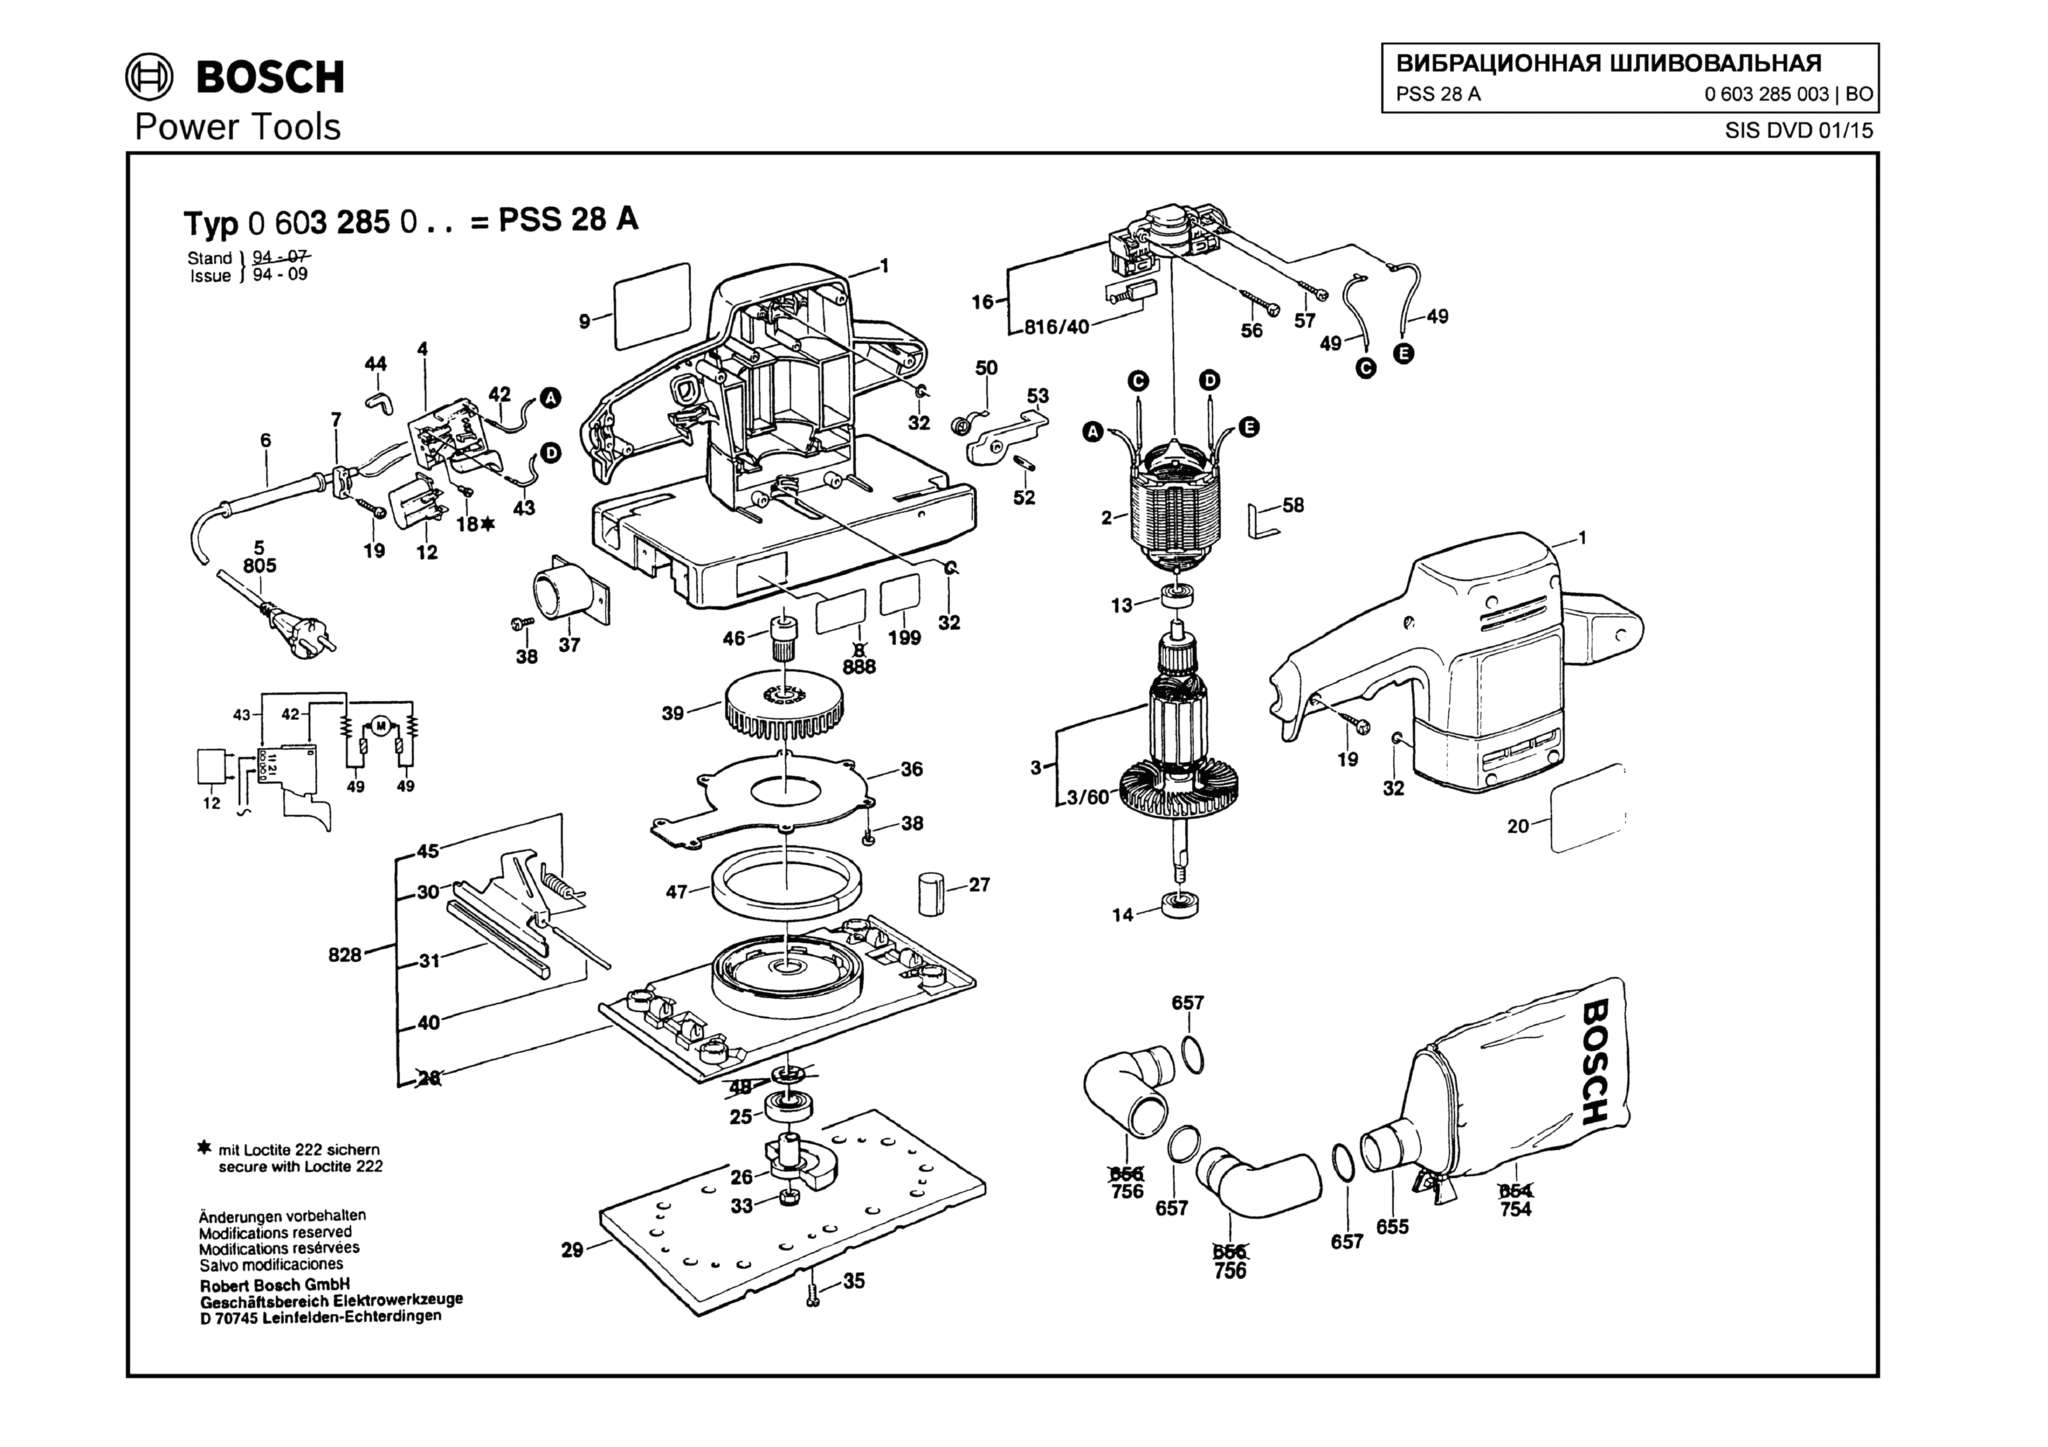 Запчасти, схема и деталировка Bosch PSS 28 A (ТИП 0603285003)